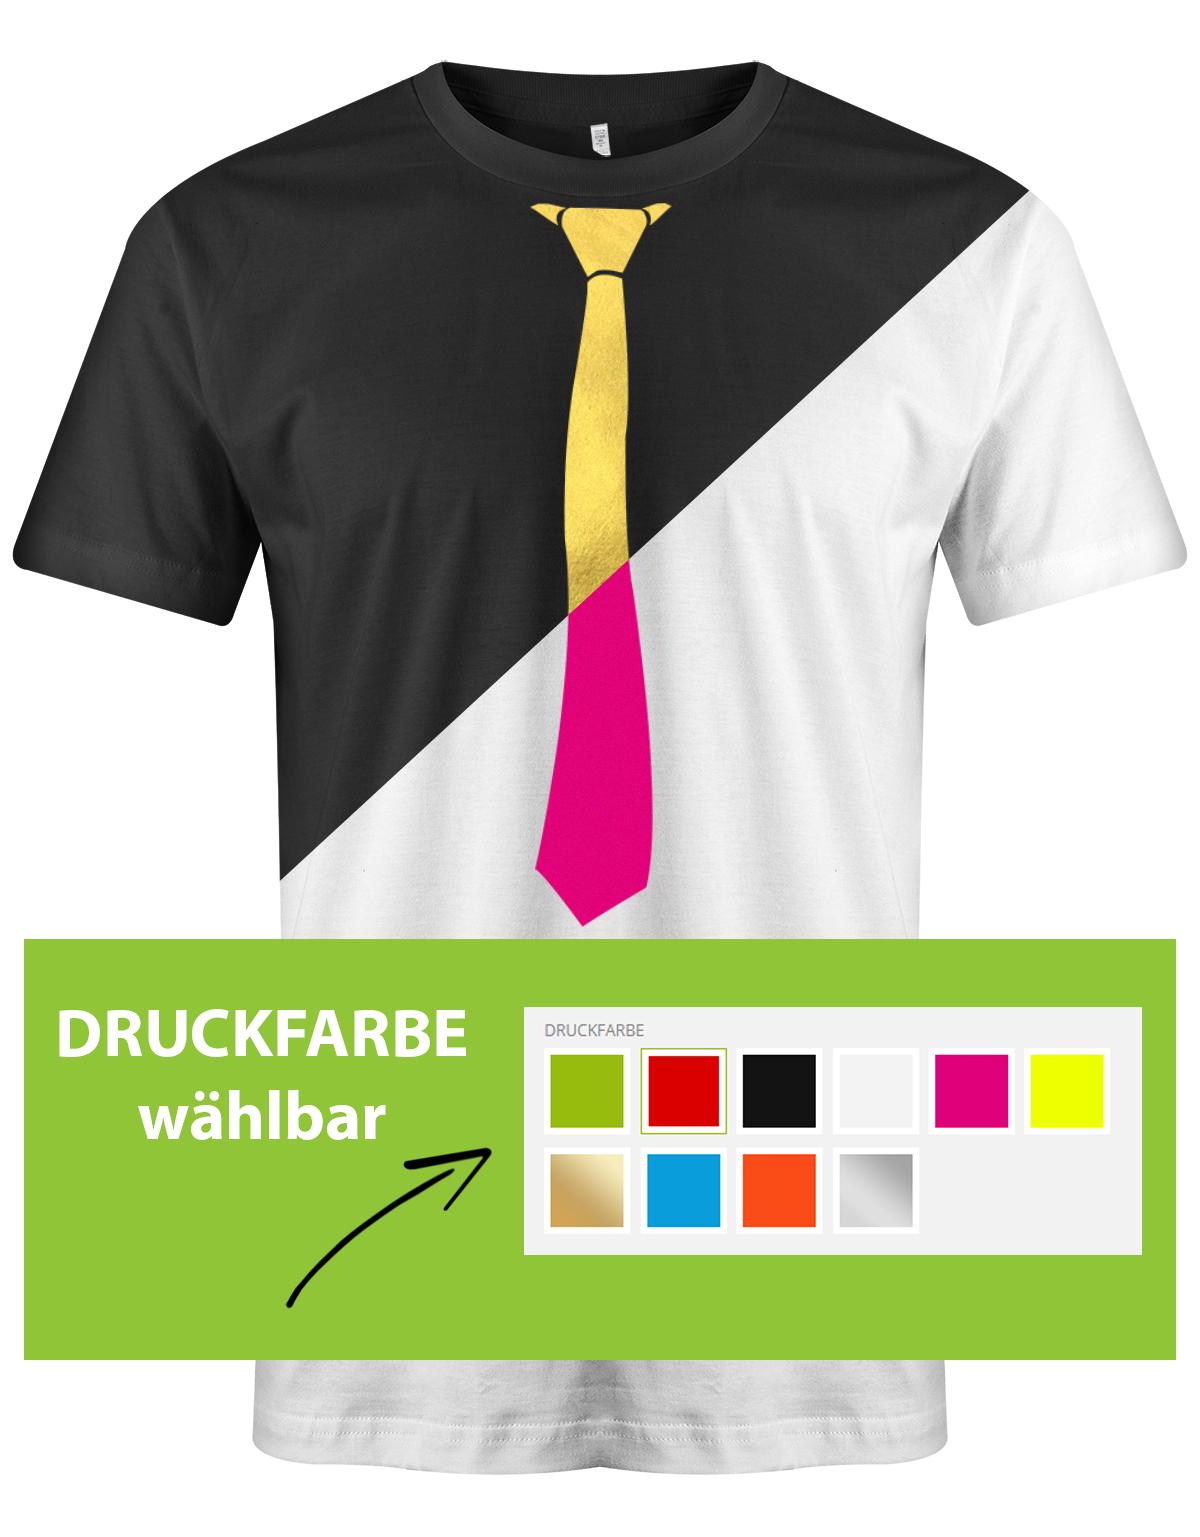 Krawatte-Sportlich-Shirt-Style-Druckfarbe-w-hlbar